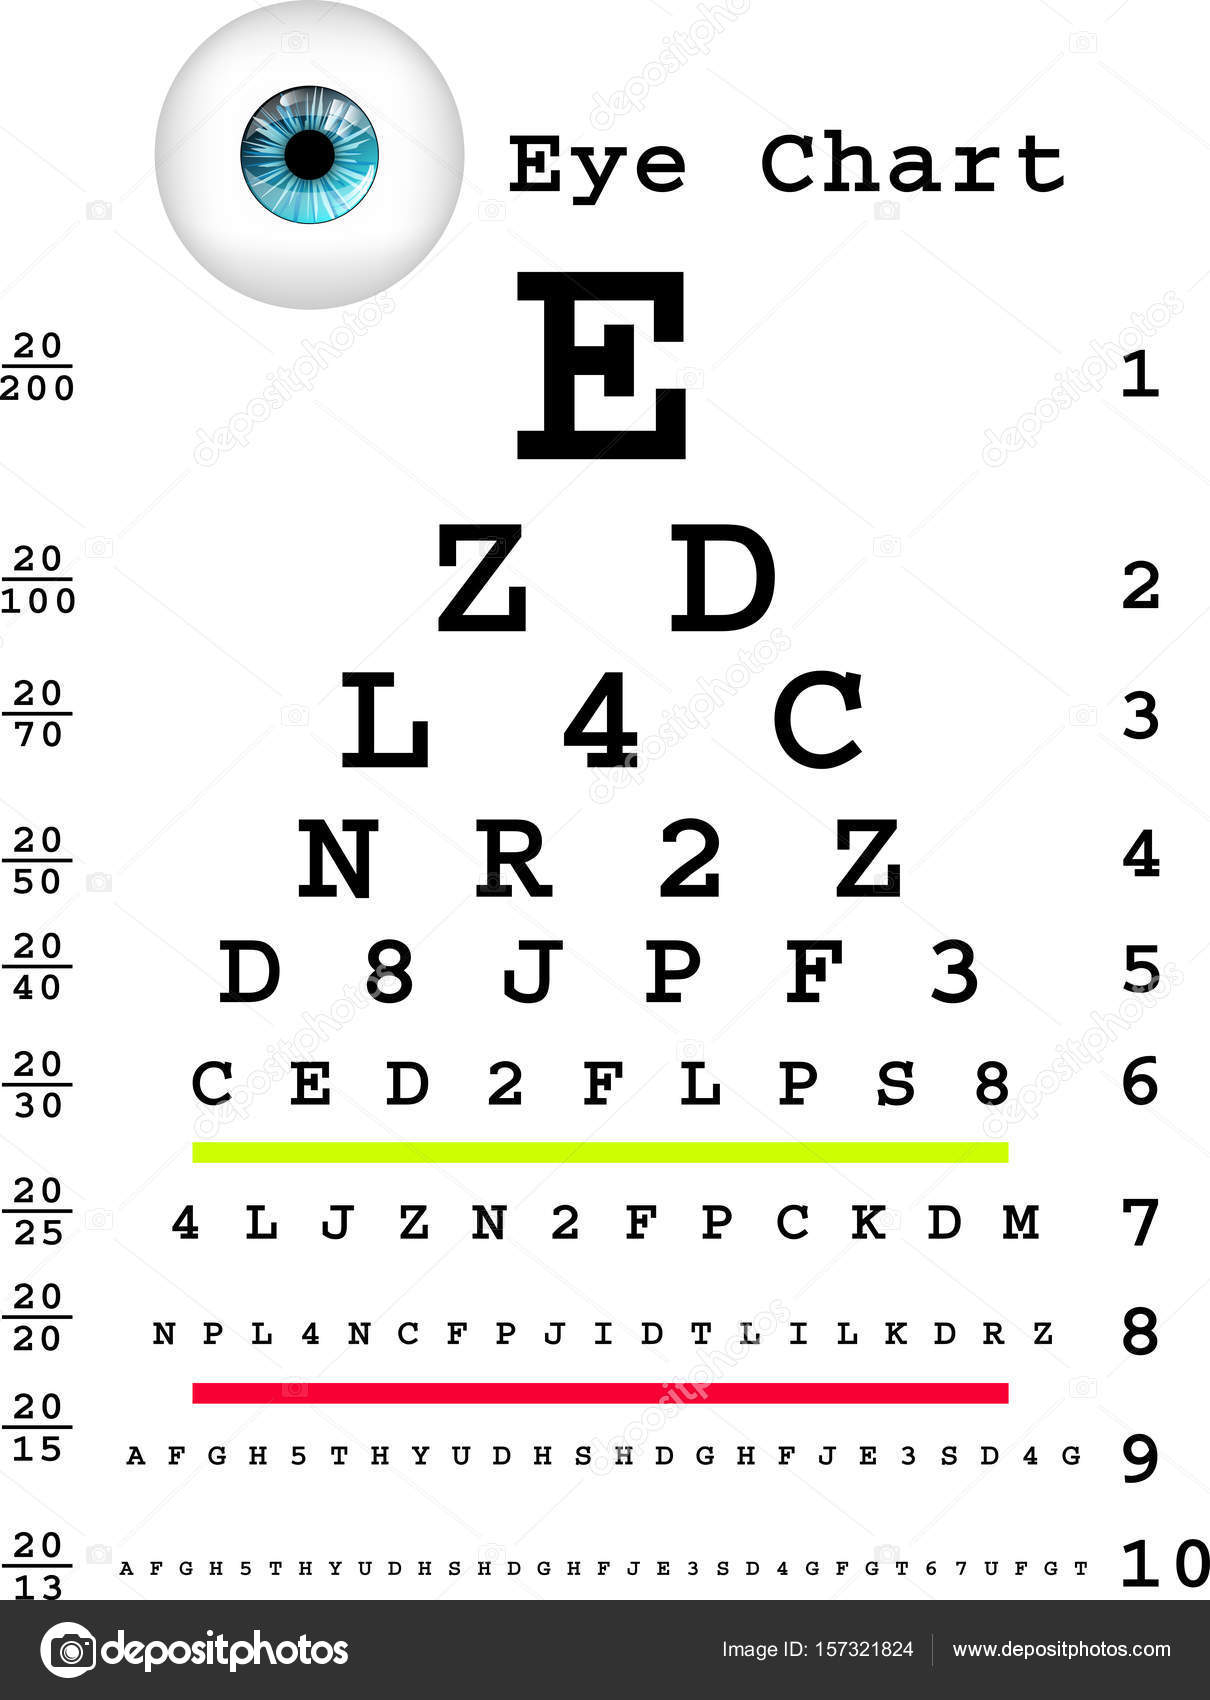 Download An Eye Chart